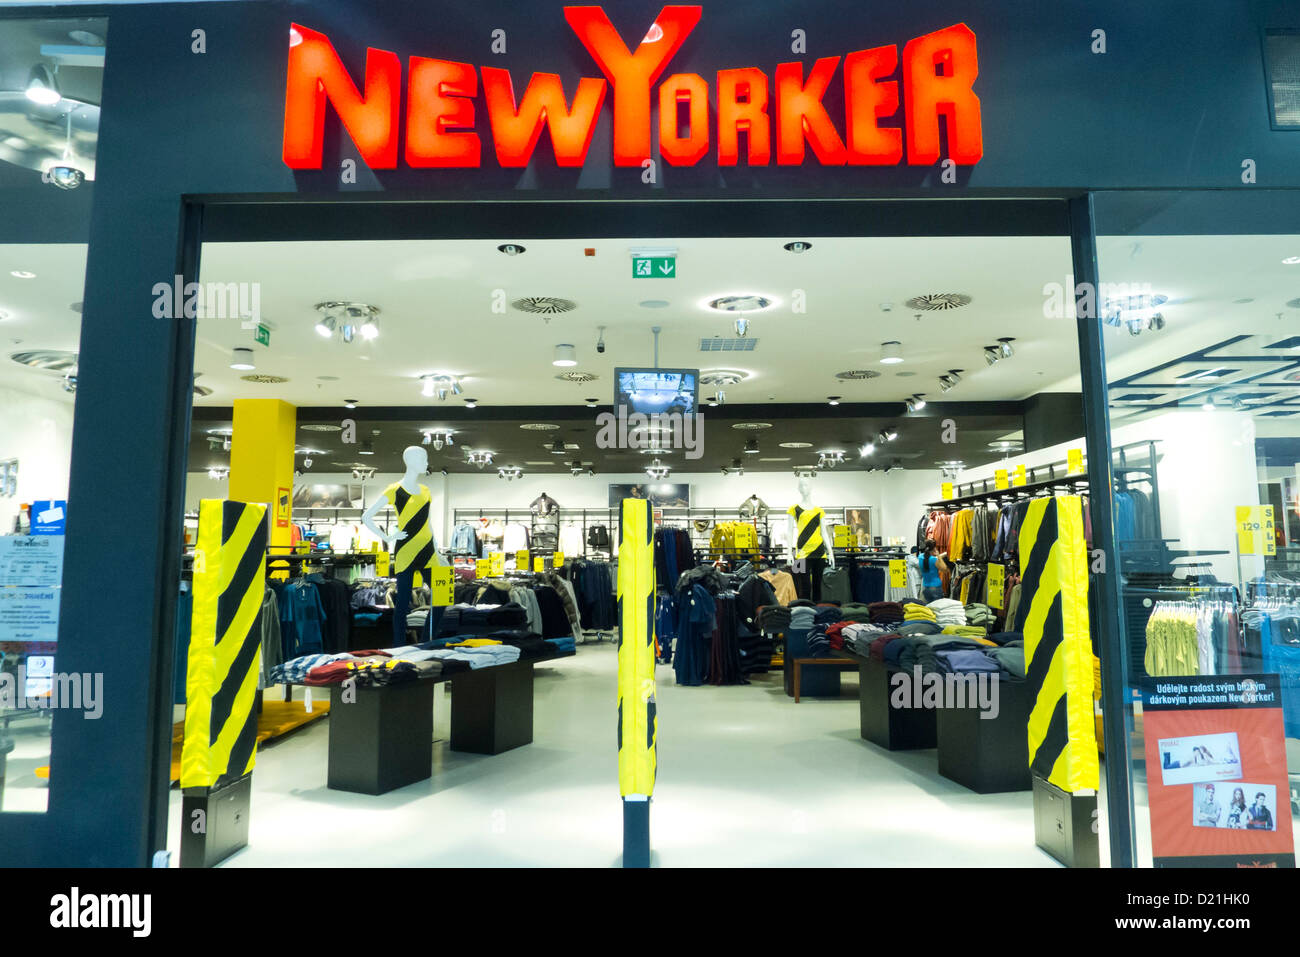 Eingang eines NewYorker store Stockfotografie - Alamy